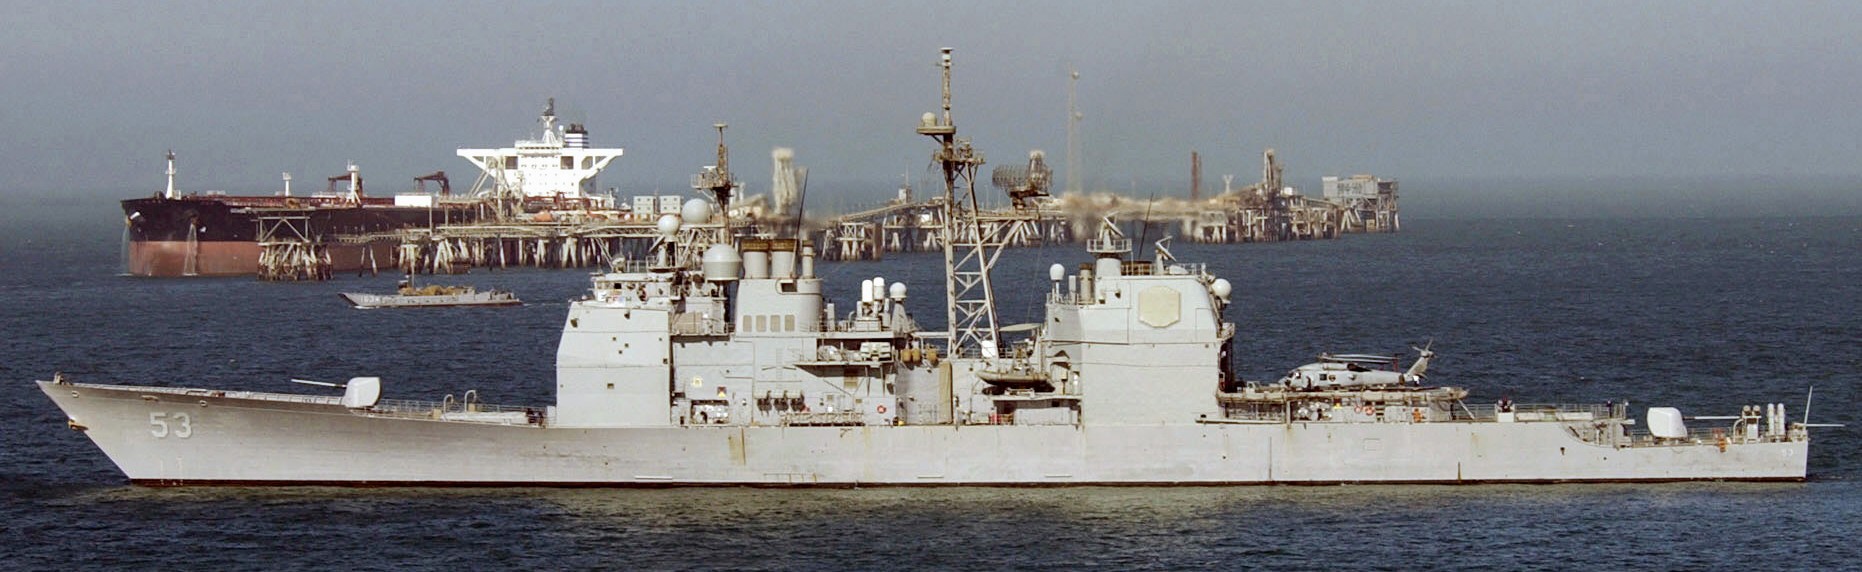 cg-53 uss mobile bay ticonderoga class guided missile cruiser aegis us navy persian gulf 31